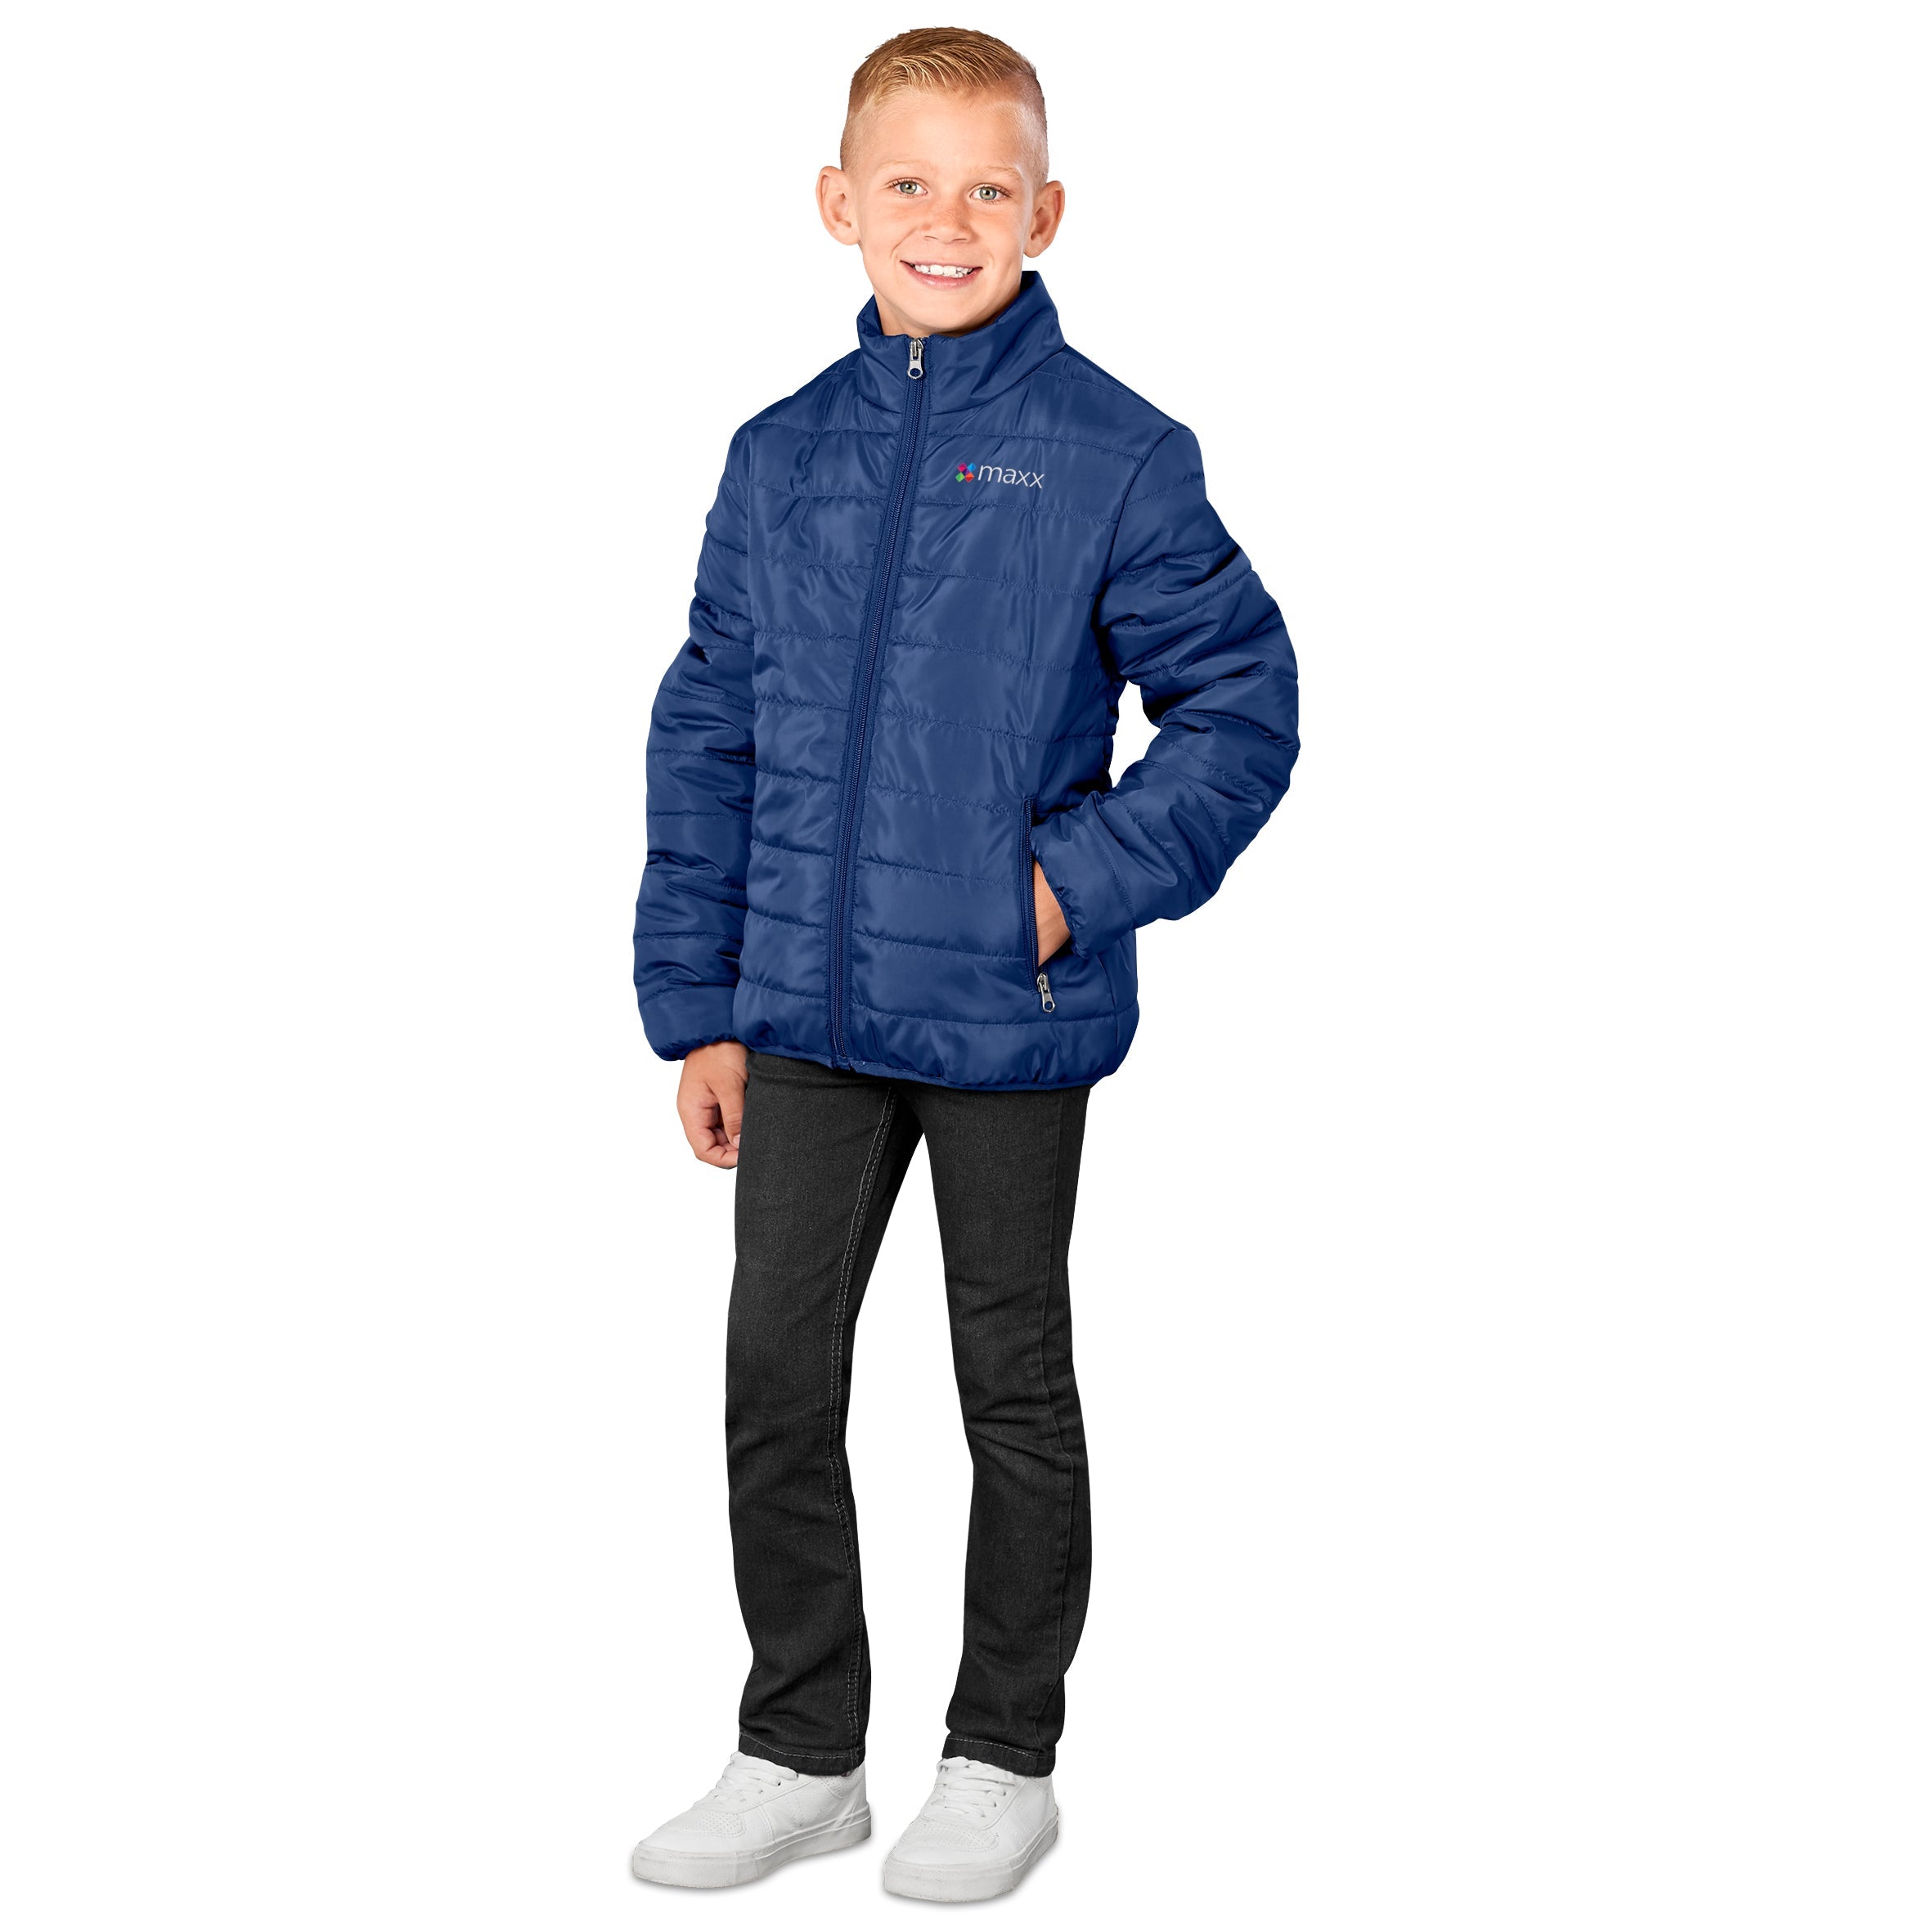 Kids Hudson Jacket - Coats & Jackets